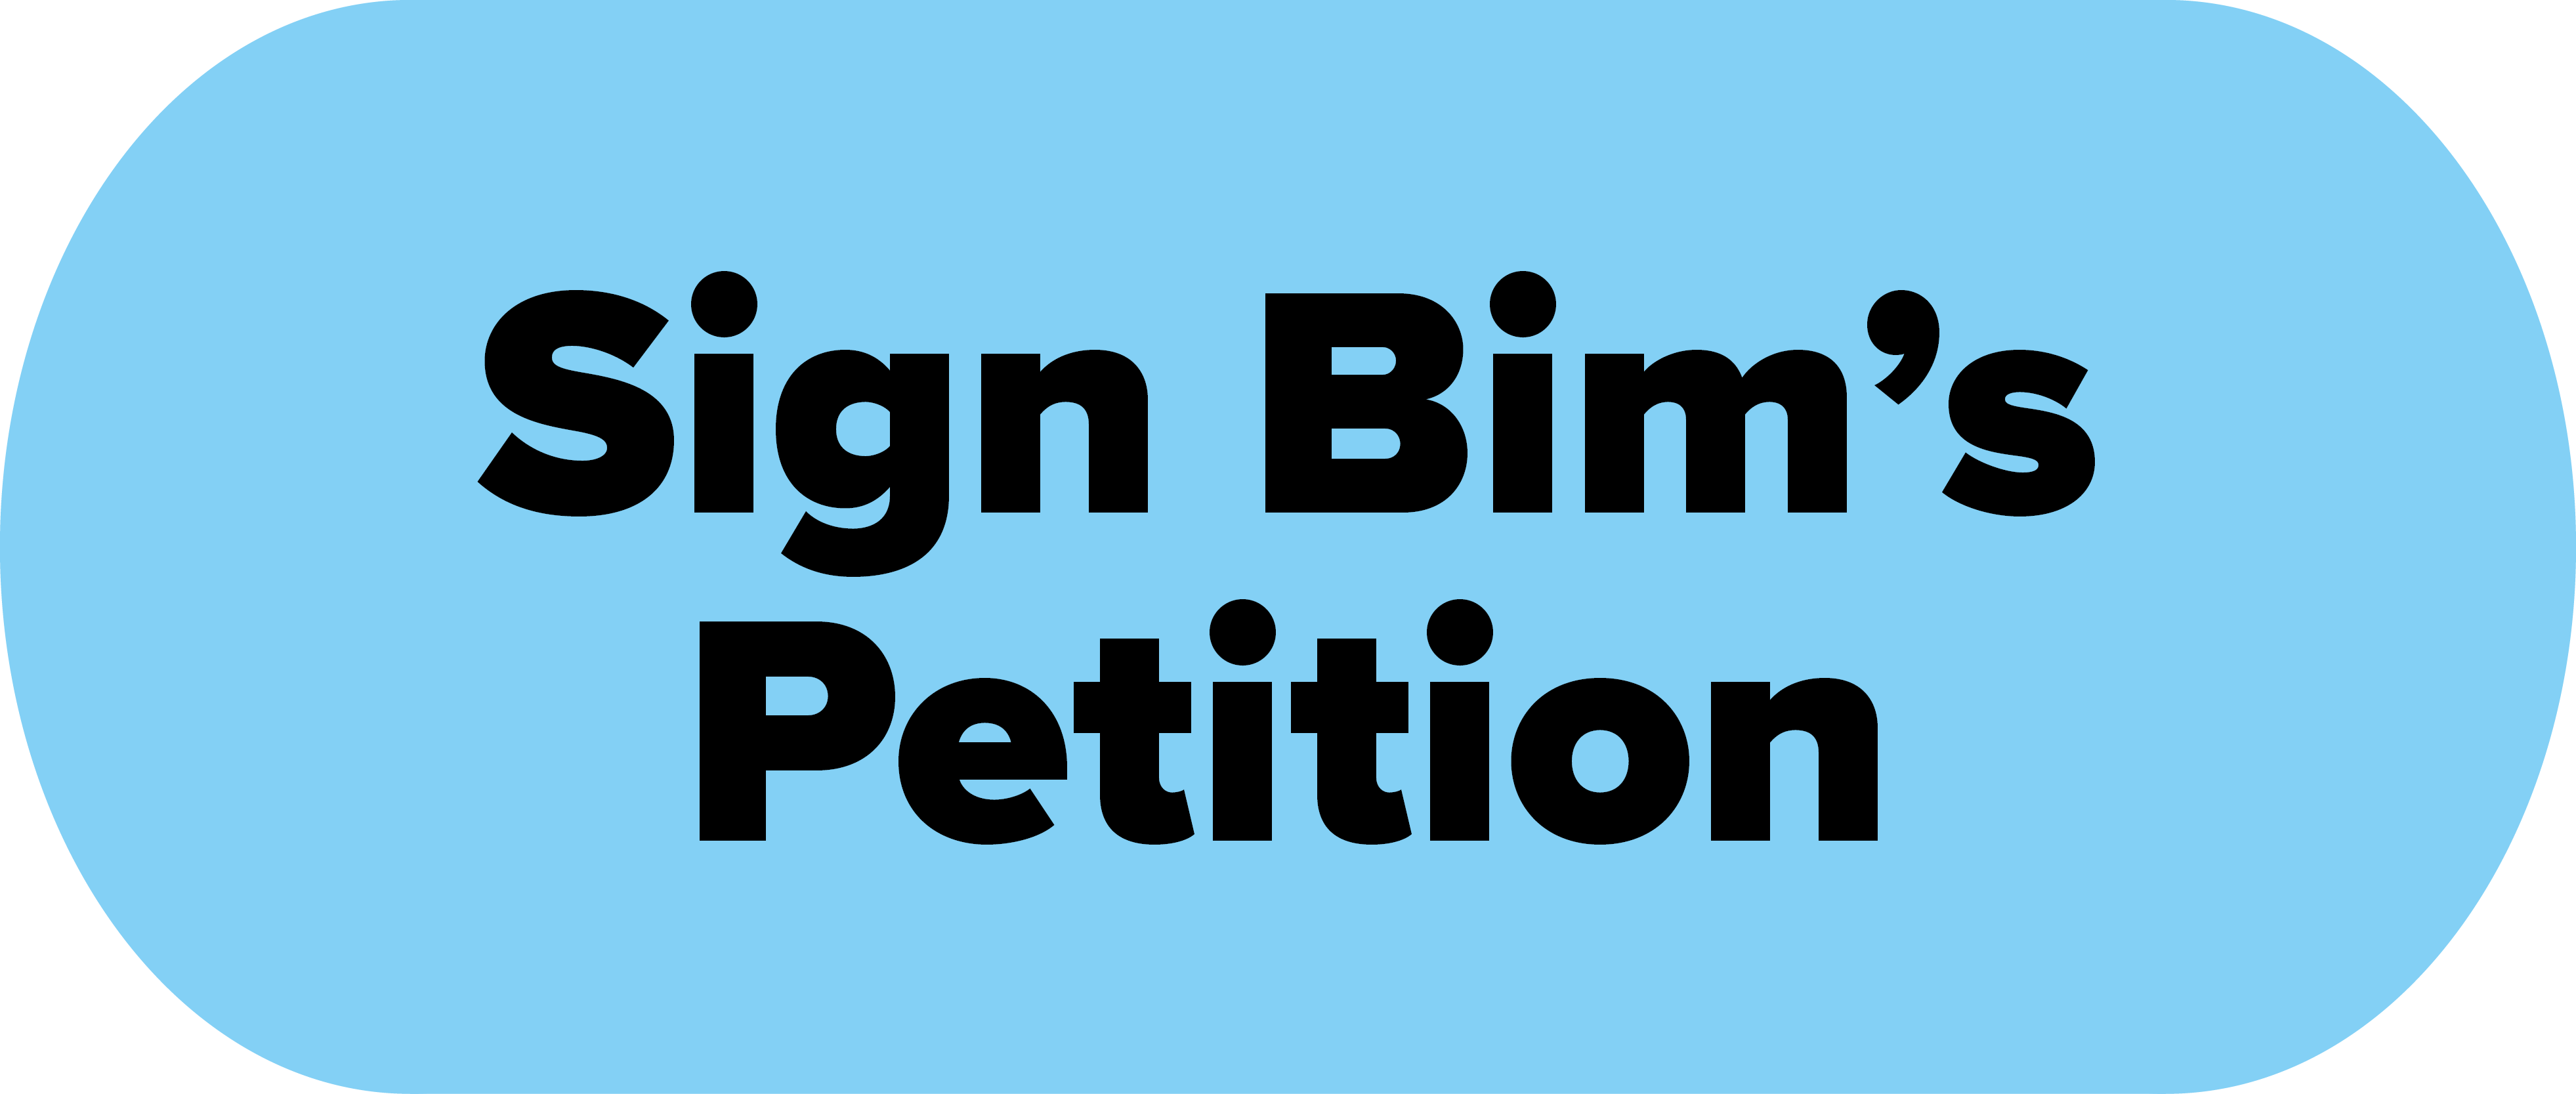 Sign Bim's Petition